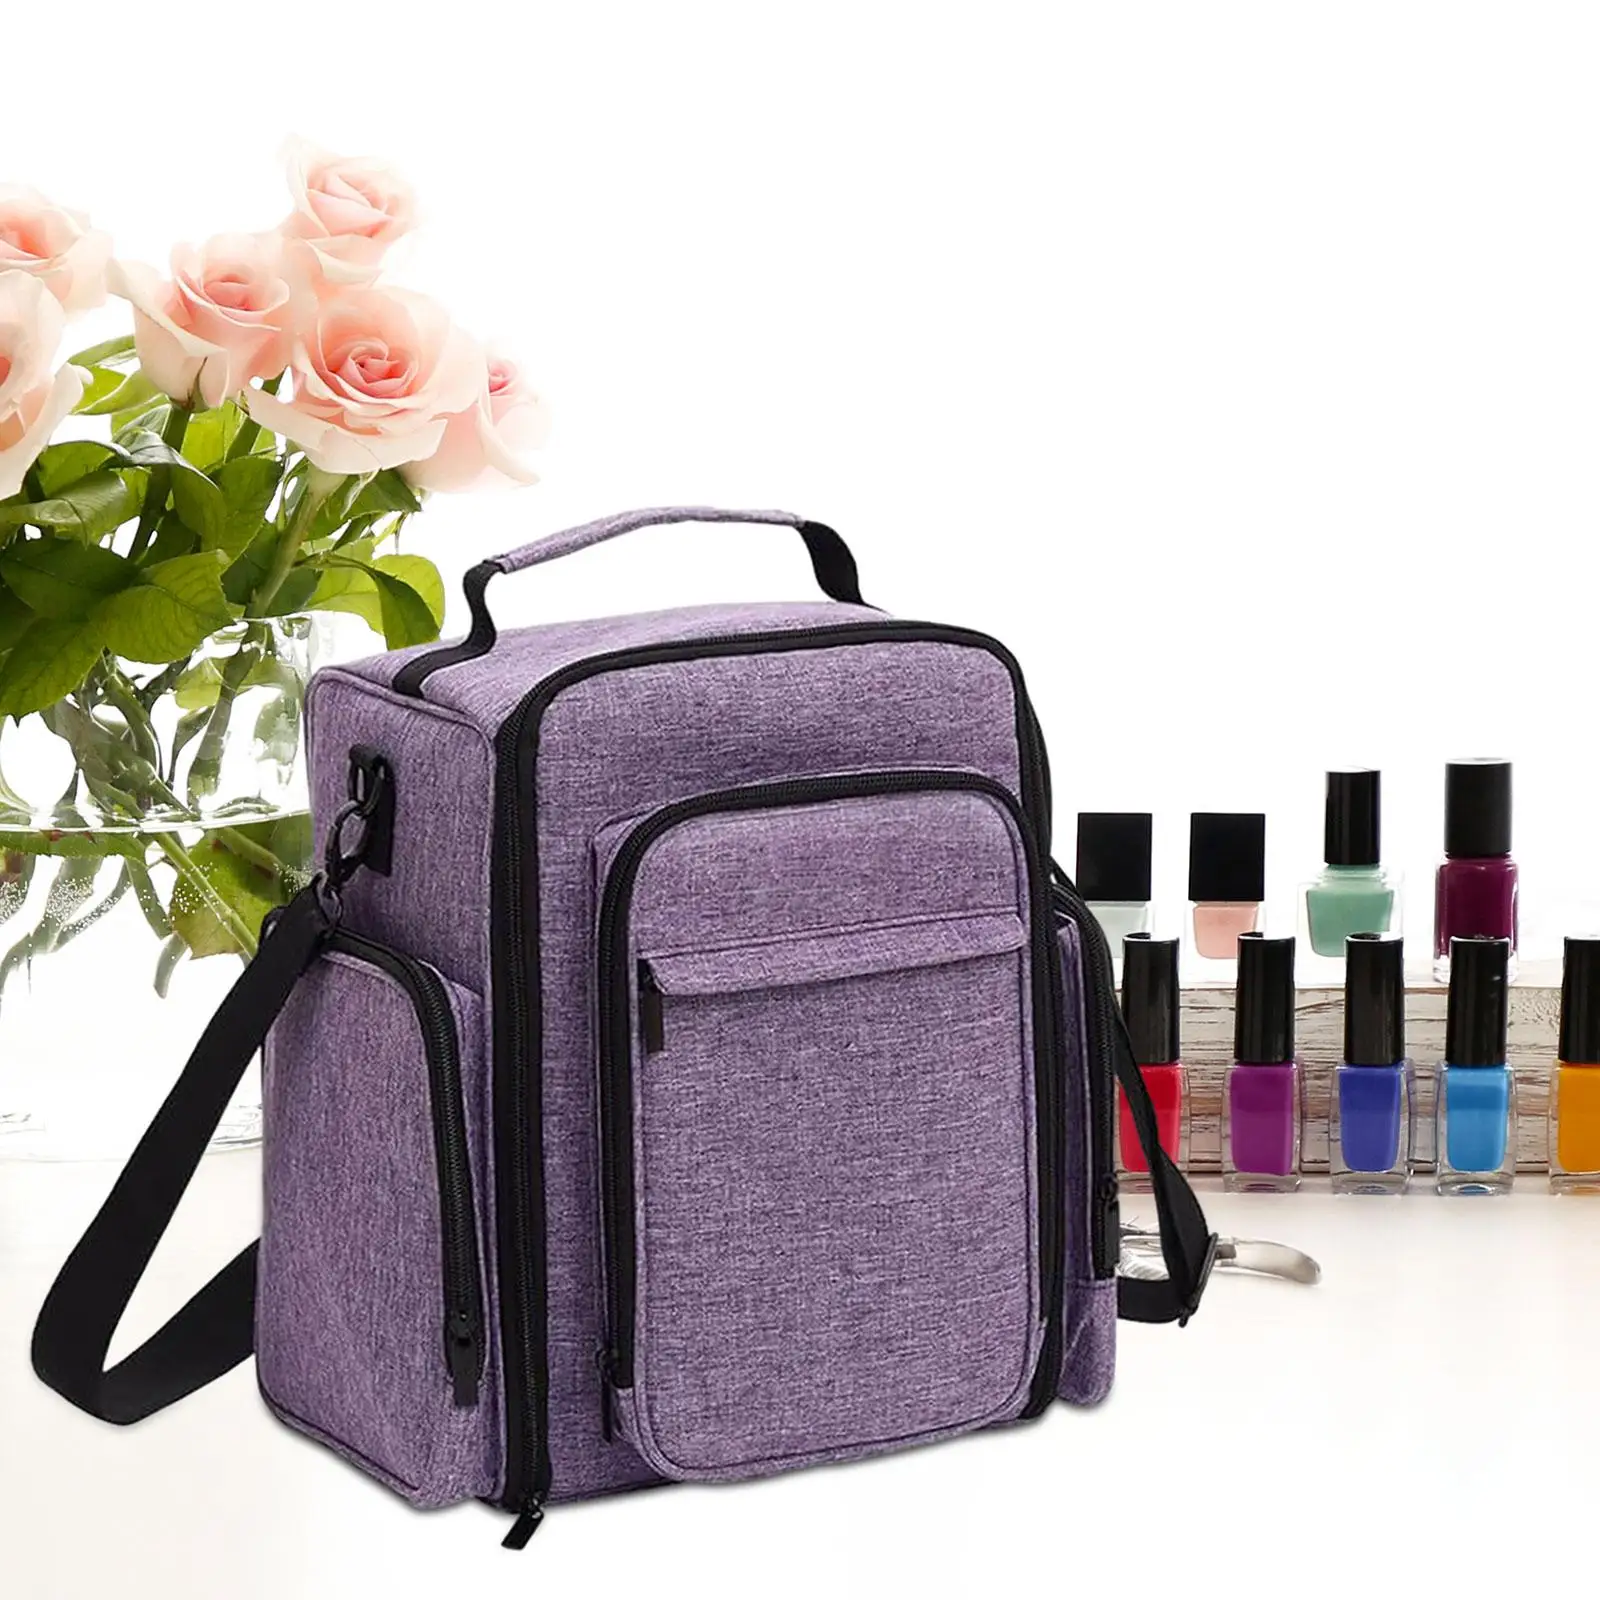 Large Nail Polish Case Portable Large Capacity Travel Makeup Bag Organizer Toiletry Bag Multifunctional for Home Indoor Camping